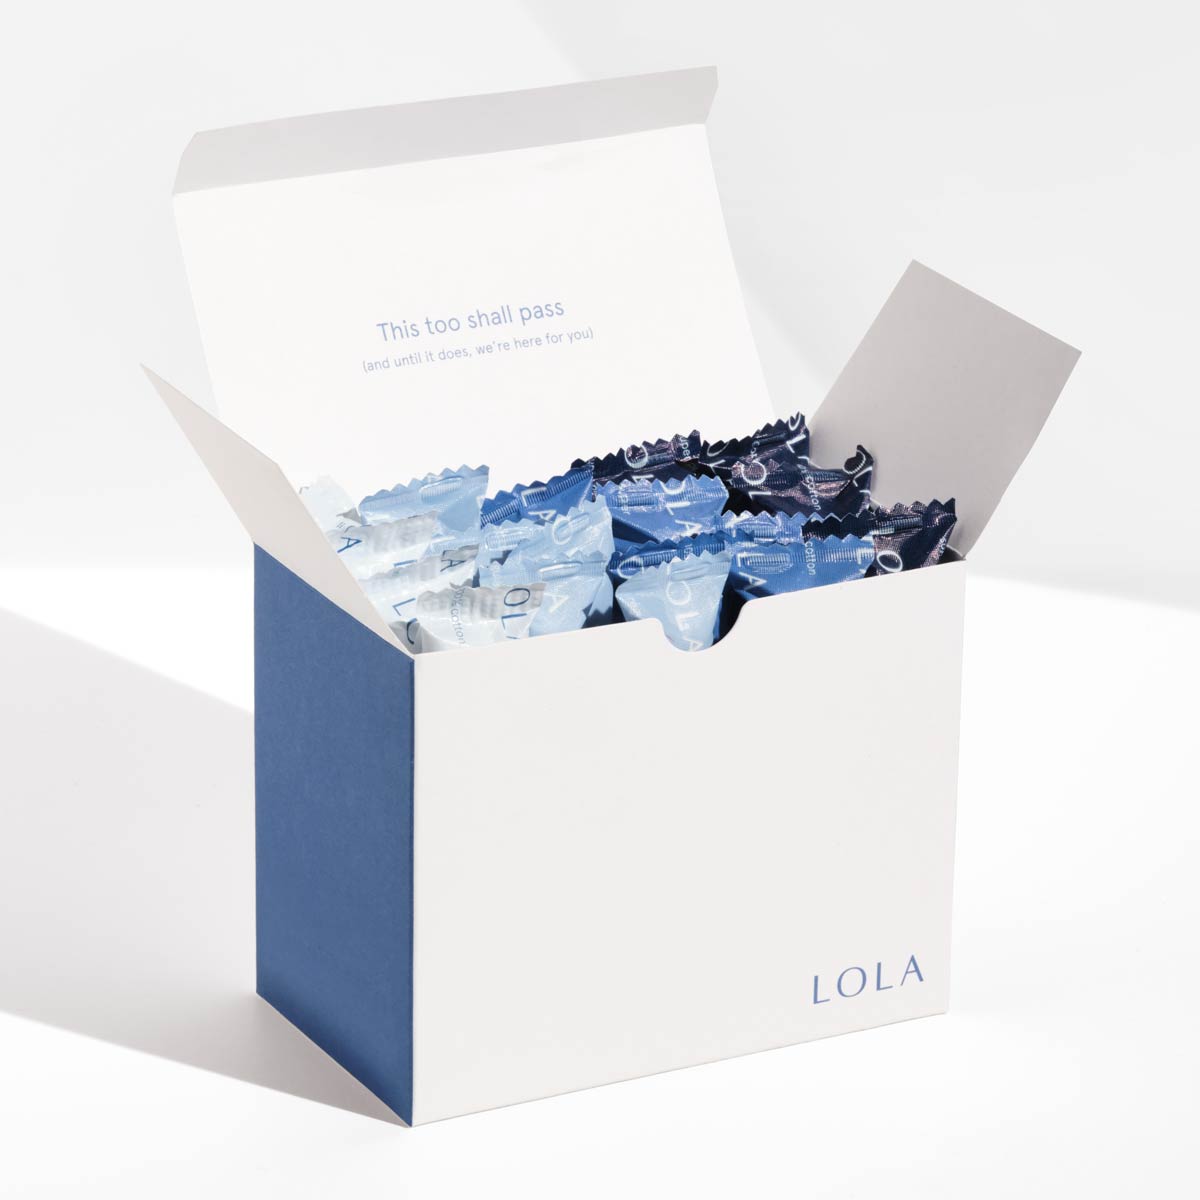 Lola Organic Compact Plastic Applicator Regular Tampons - Shop Tampons at  H-E-B